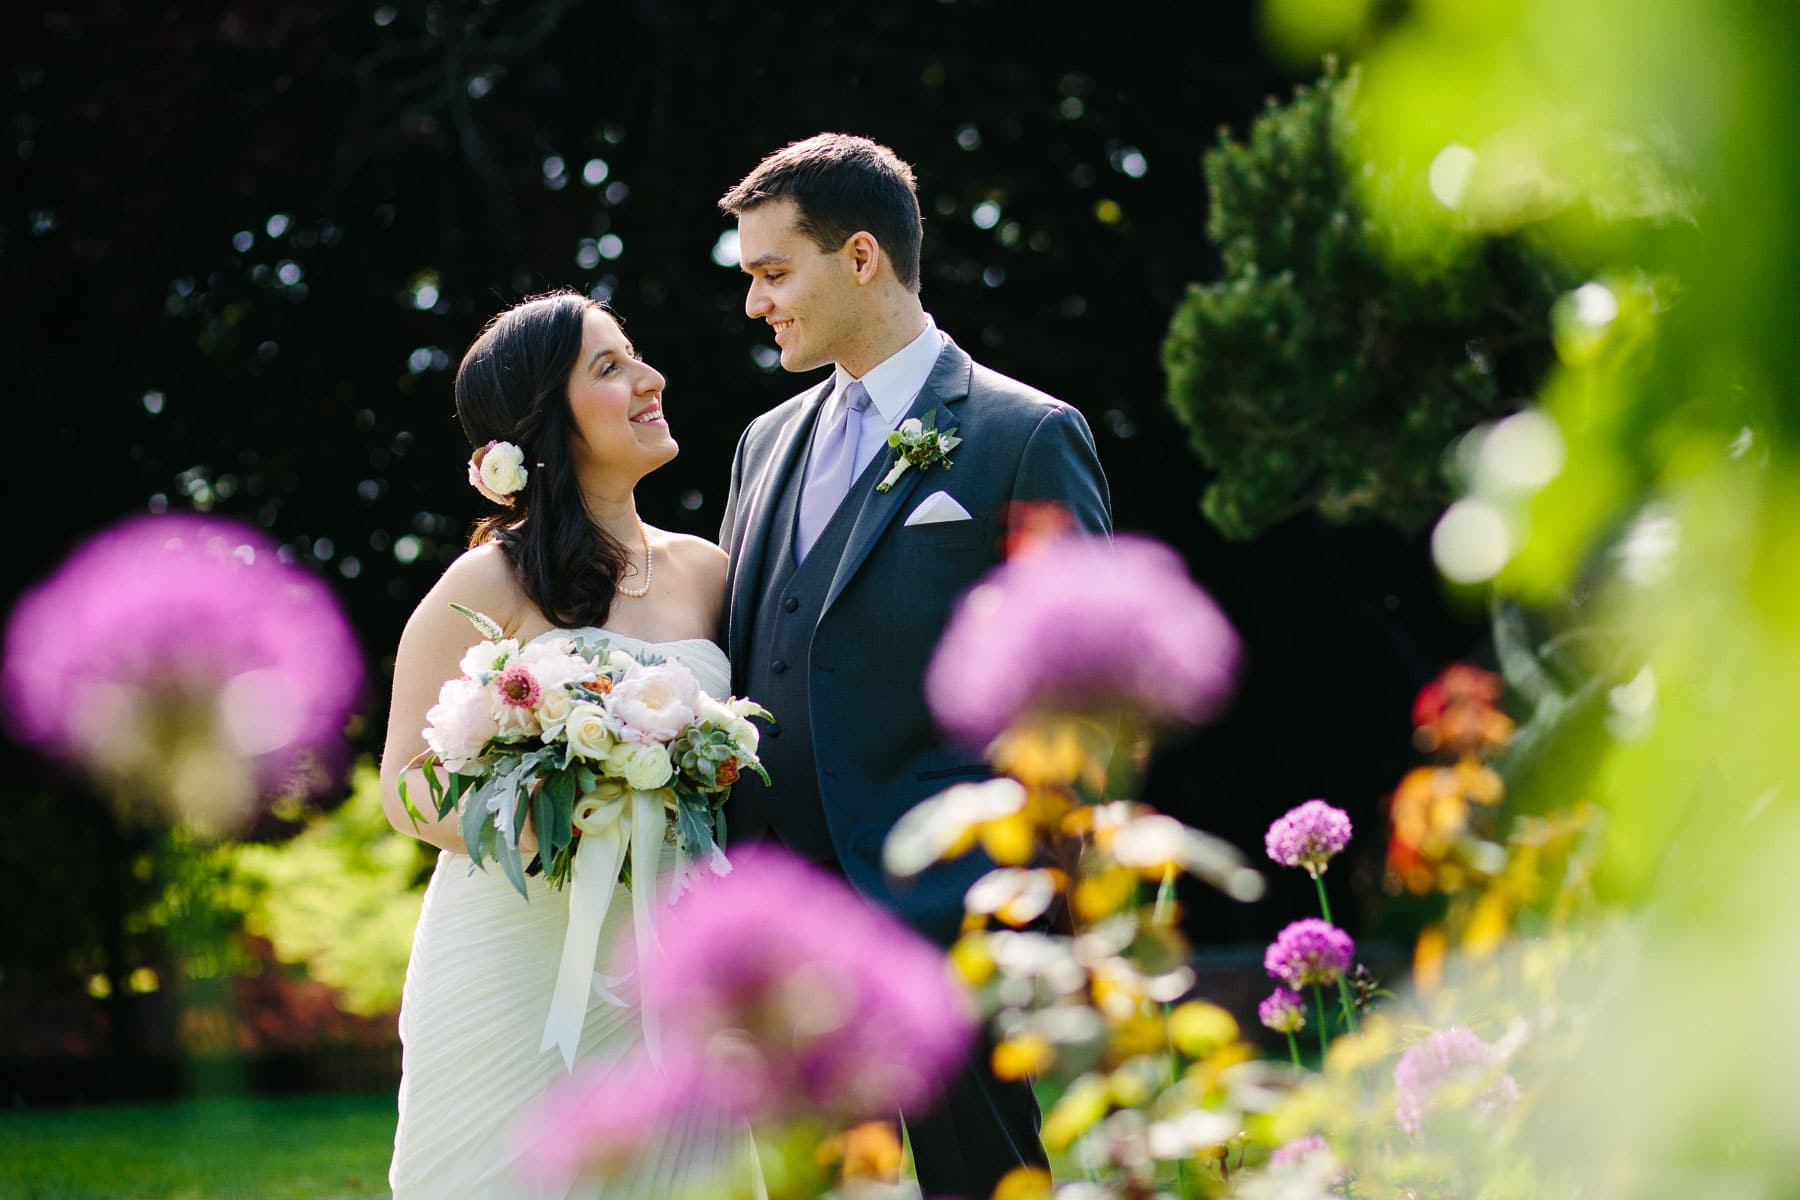 Mount Hope Farm wedding in Bristol RI | Kelly Benvenuto Photography | Boston Wedding Photographer